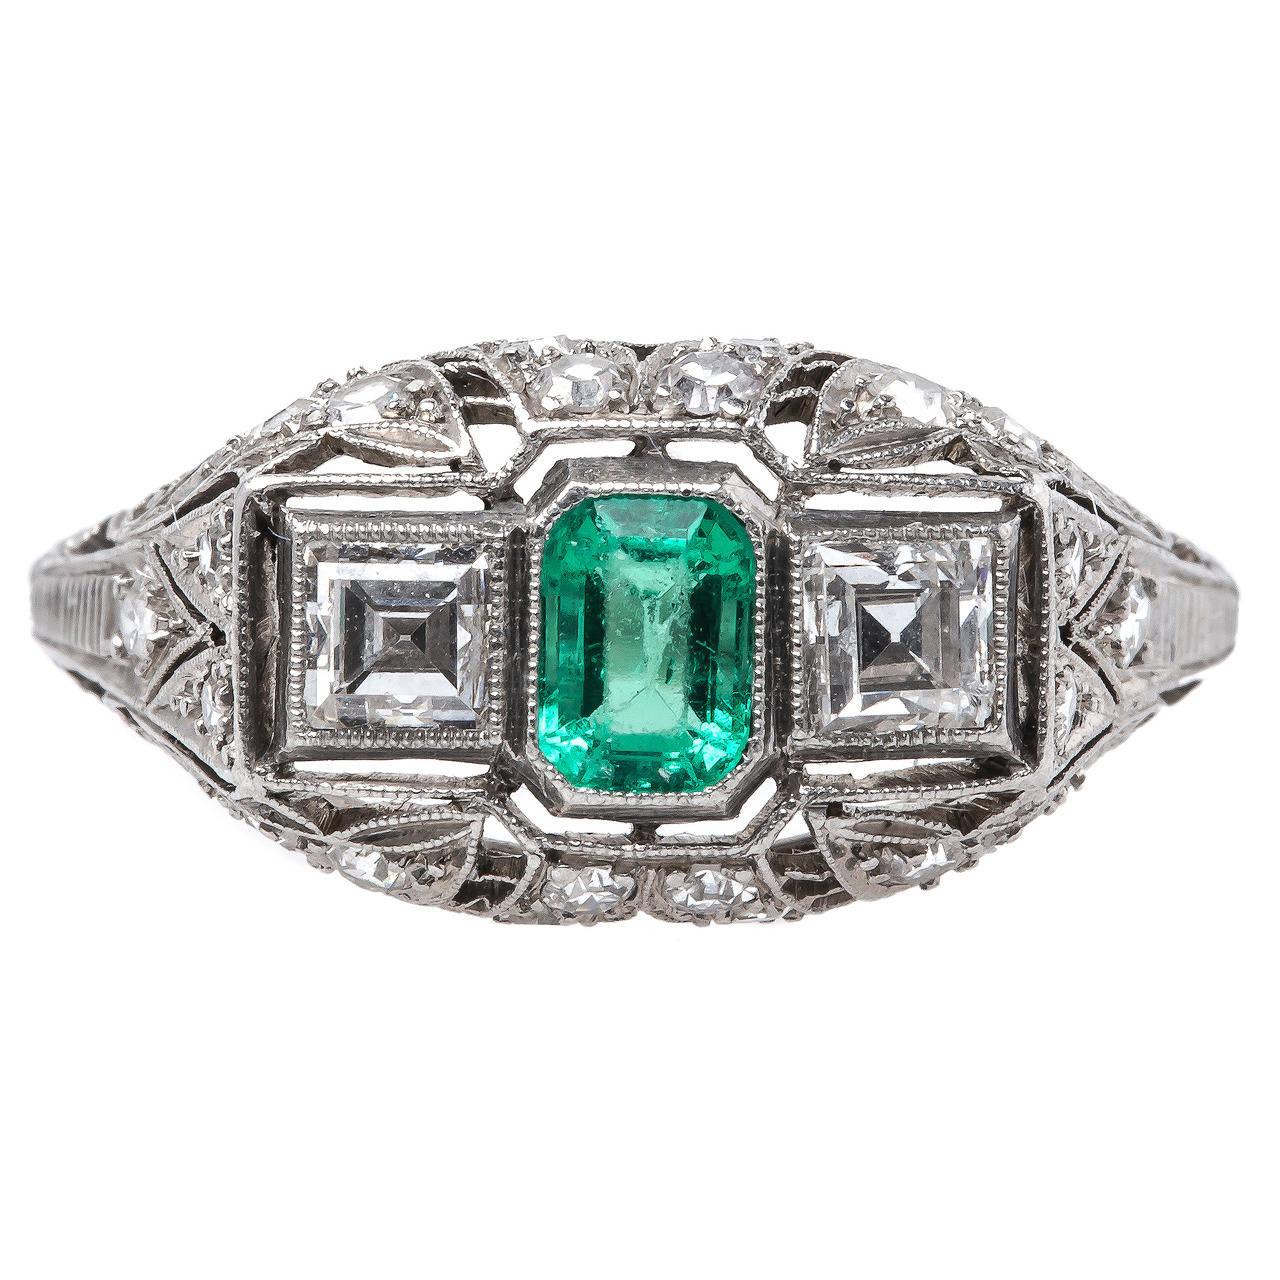 Exceptional Edwardian Era Emerald Diamond Platinum Engagement Ring